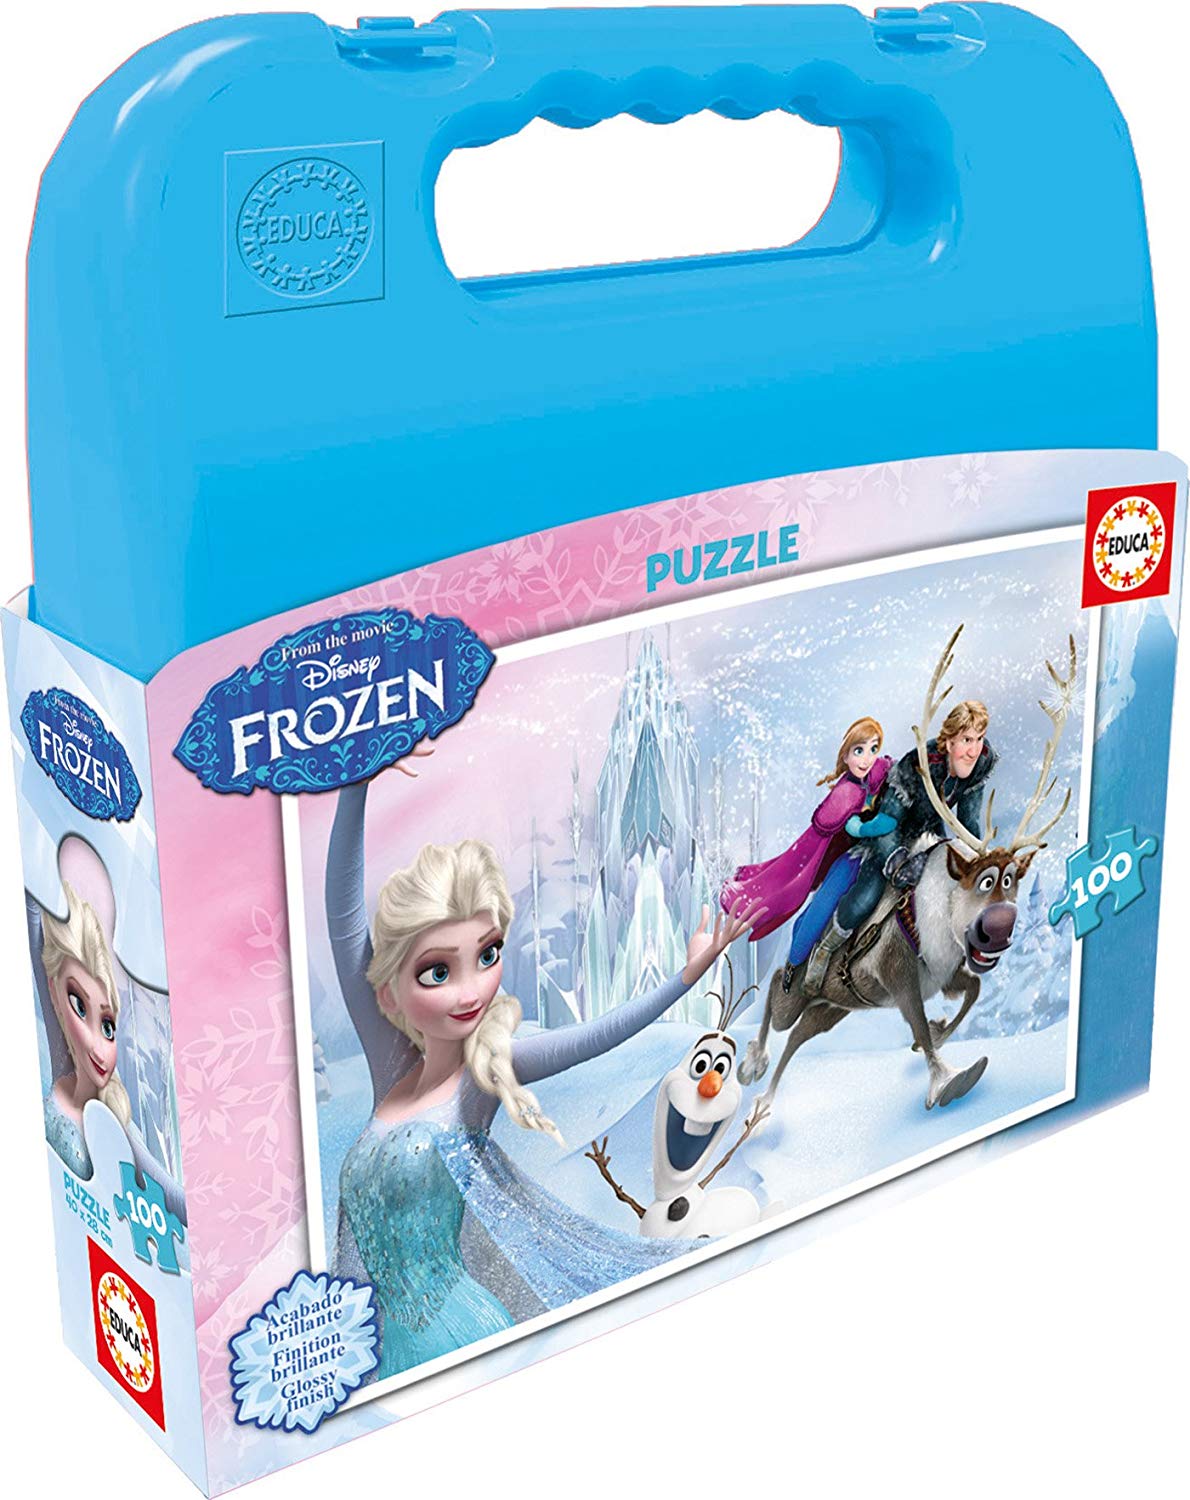 Educa 16519 - Frozen - 1000 Pieces - Disney Puzzle Bag